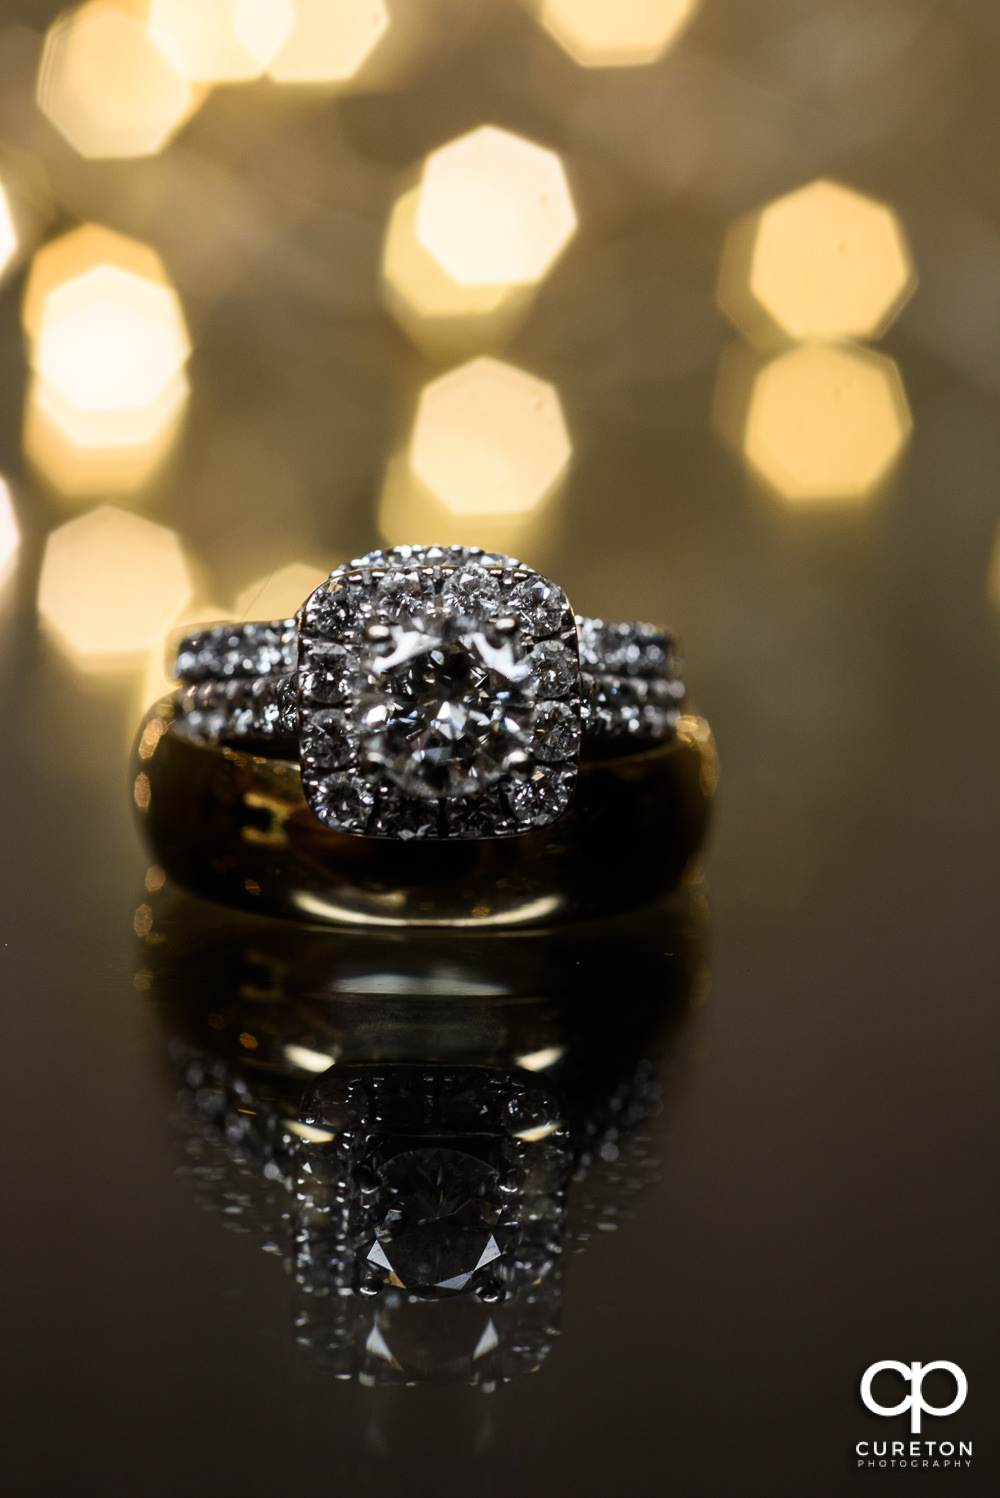 Closeup of the wedding ring.